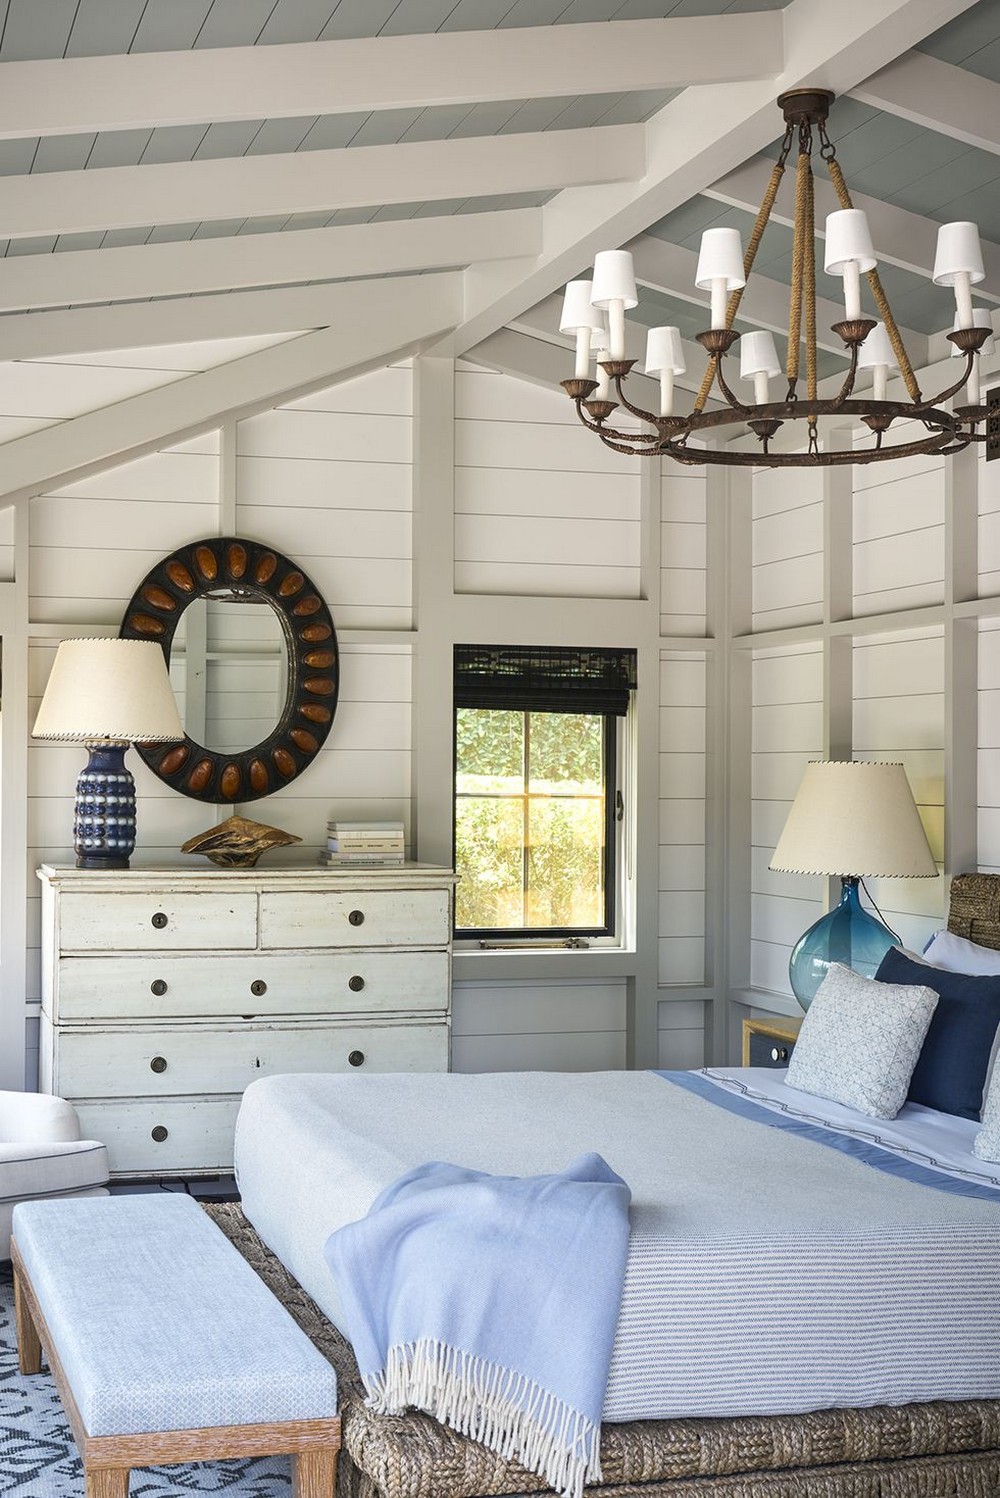 9 Exquisite Bedroom Lighting Ideas for a Modern Interior Decor 3